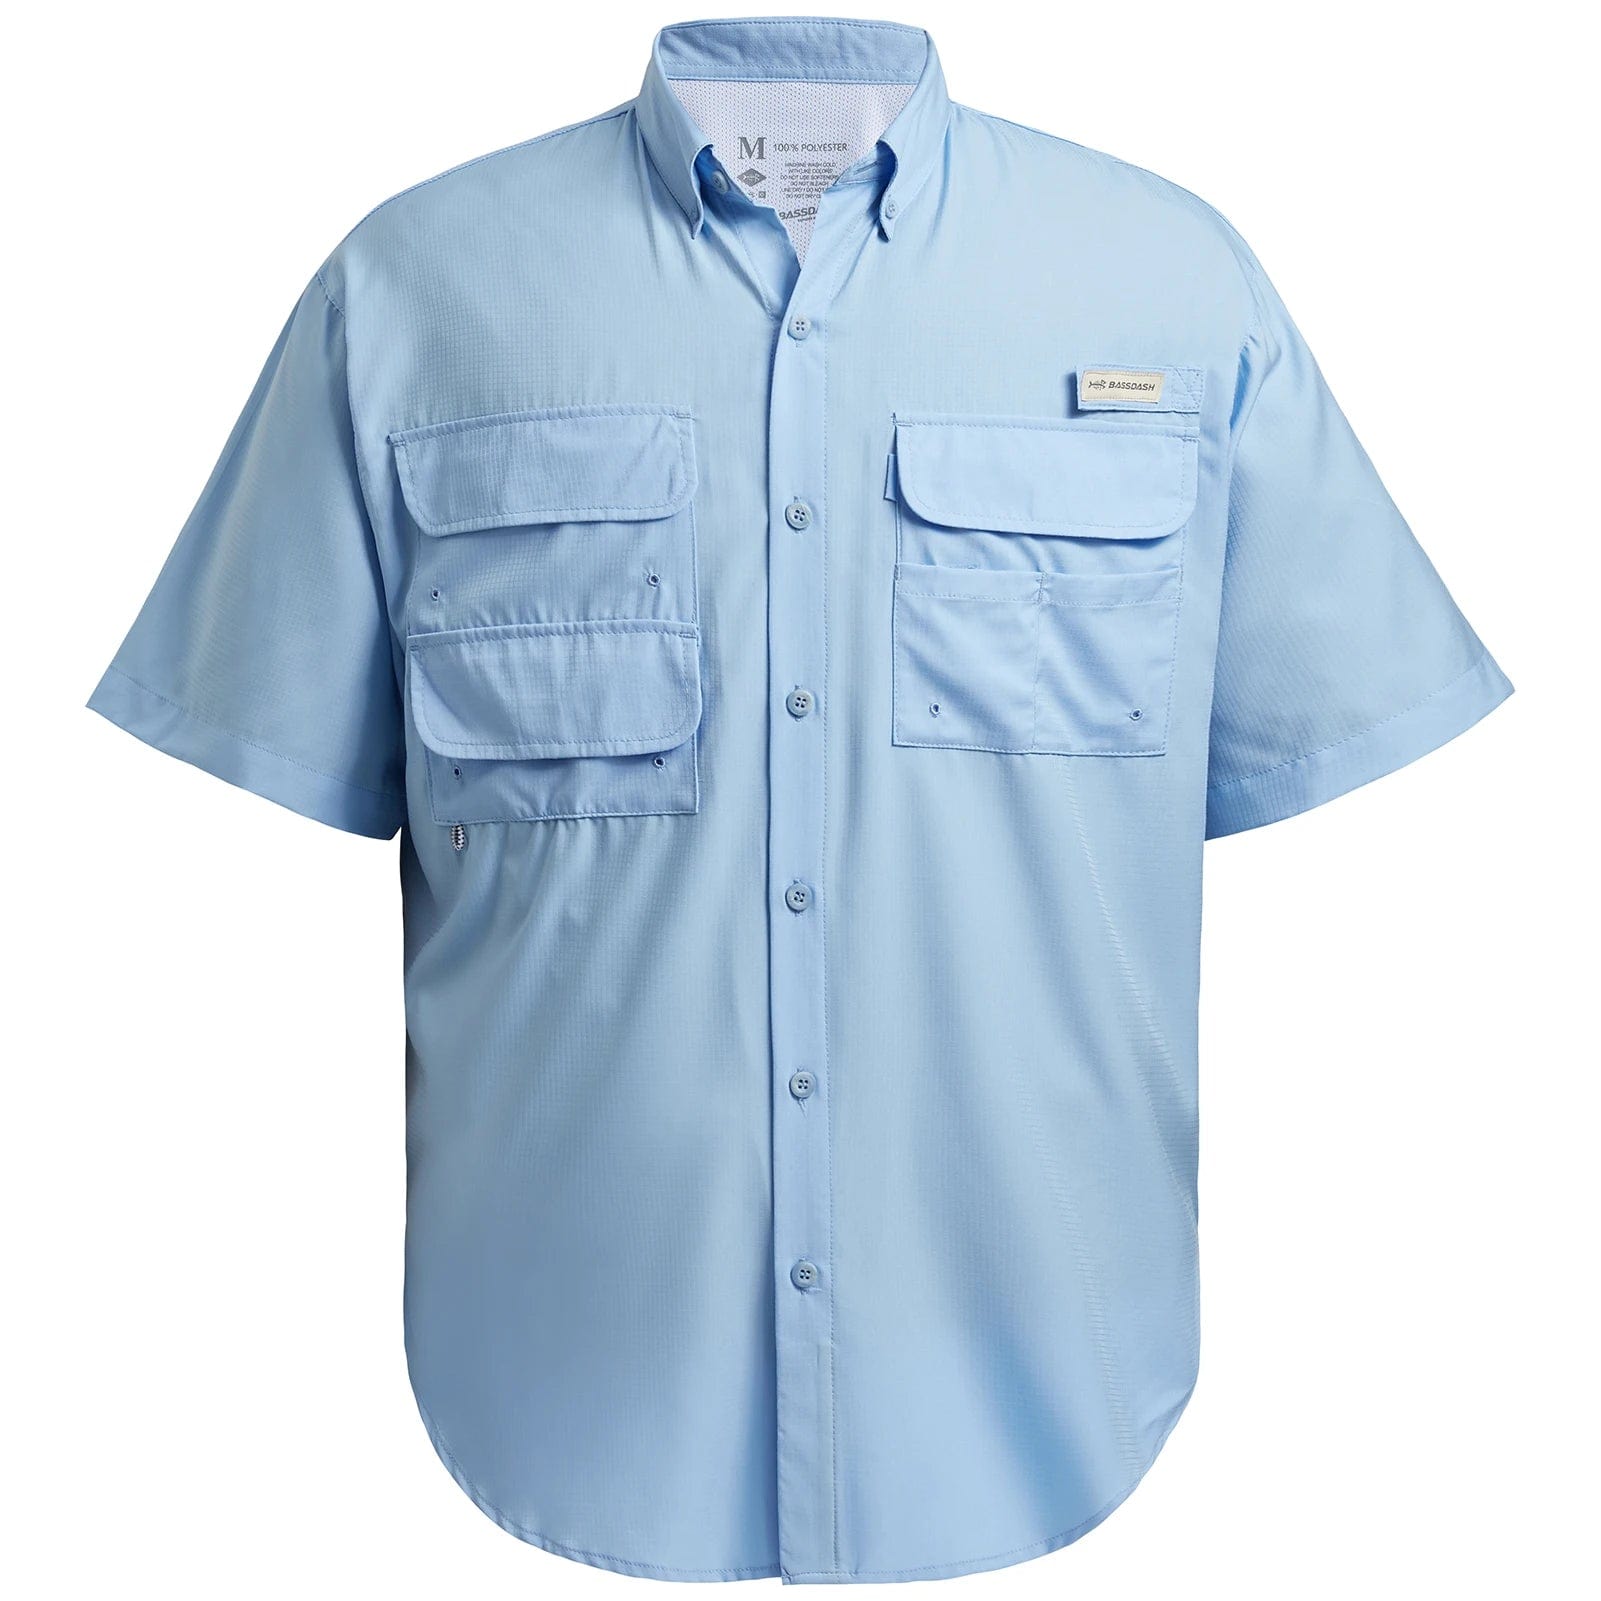 Costa Radar Sailfish Men's Short Sleeve Shirt from COSTA - CHAOS Fishing